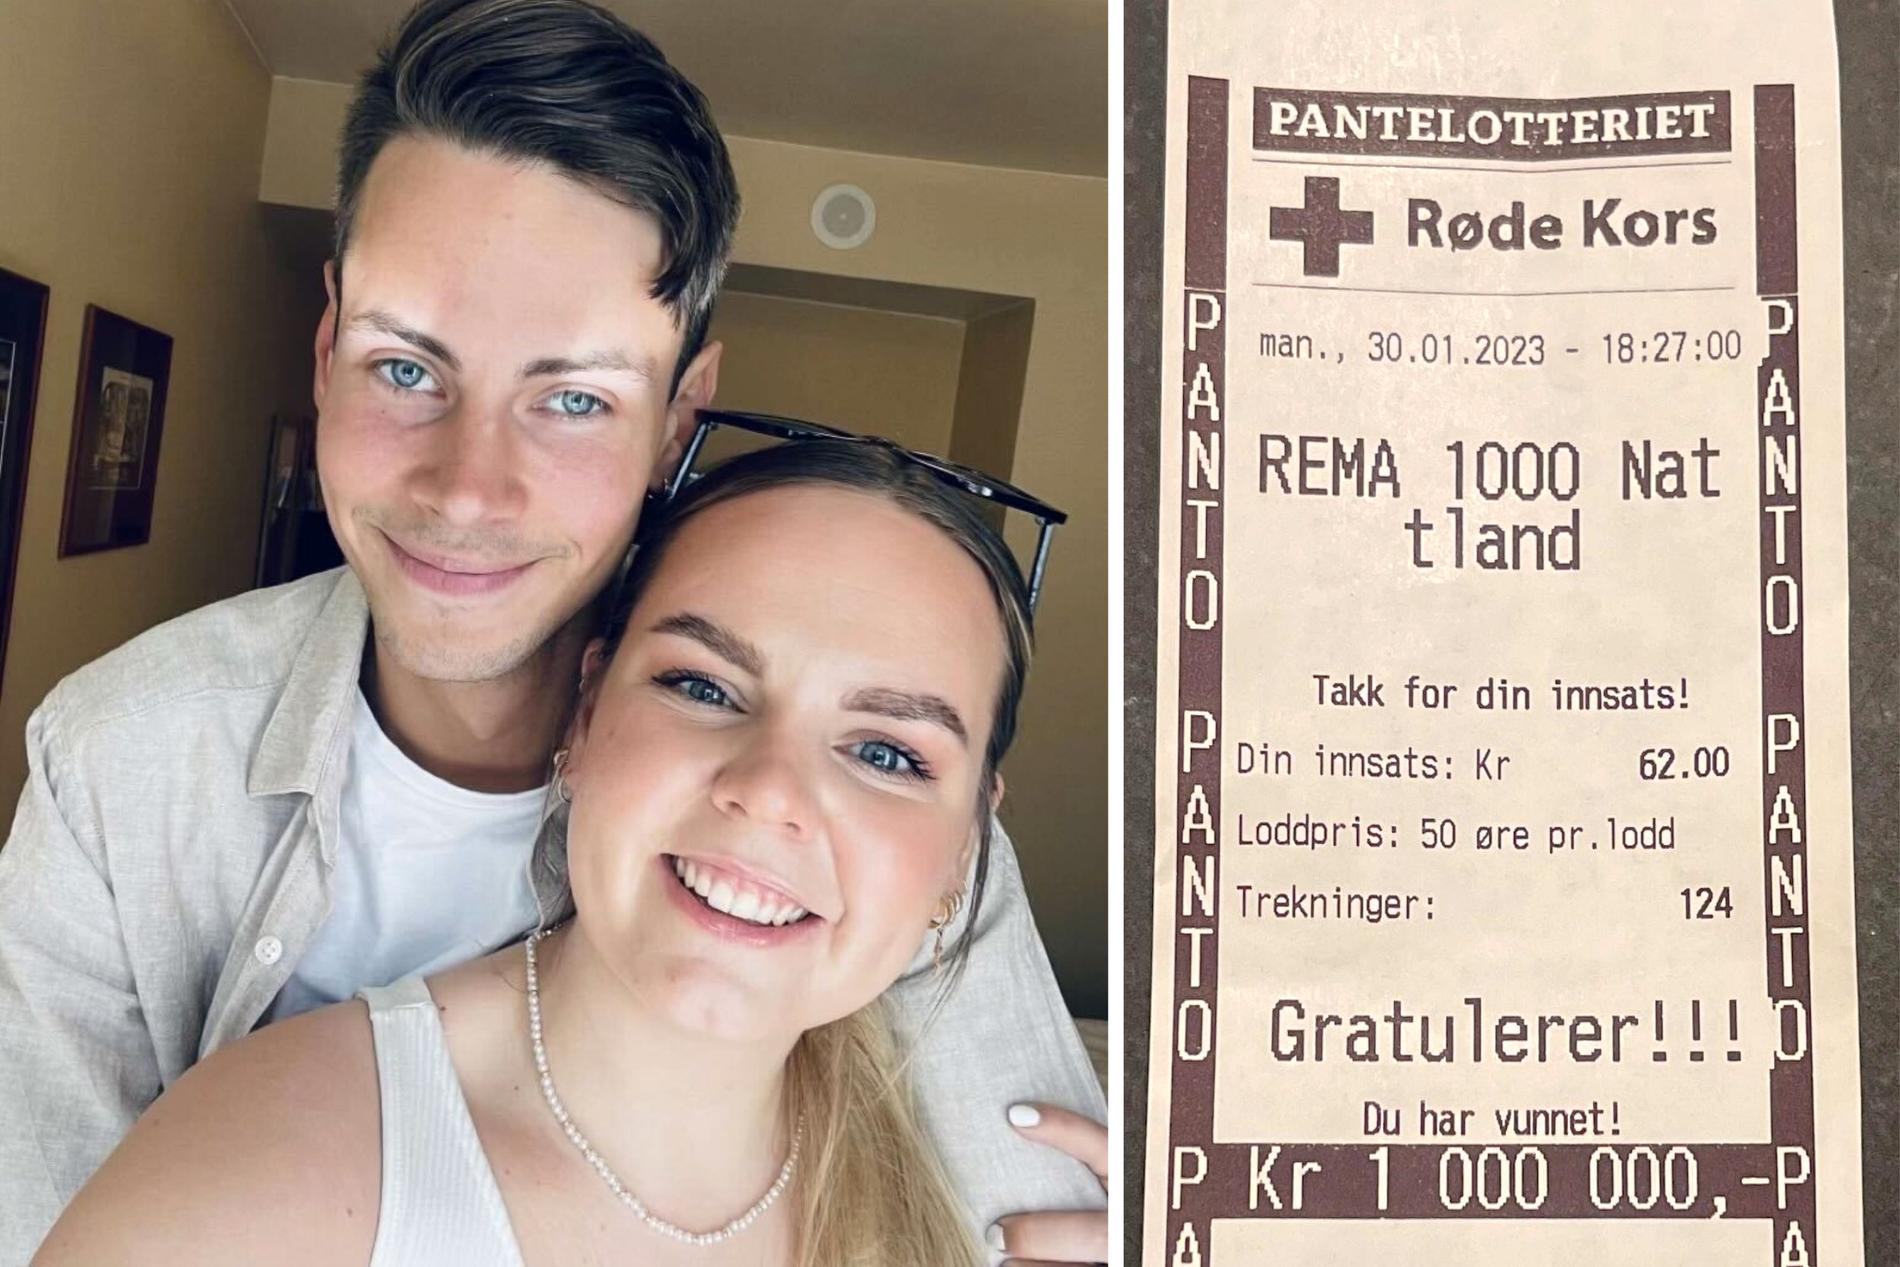 Student wins one million at Pantelotteriet